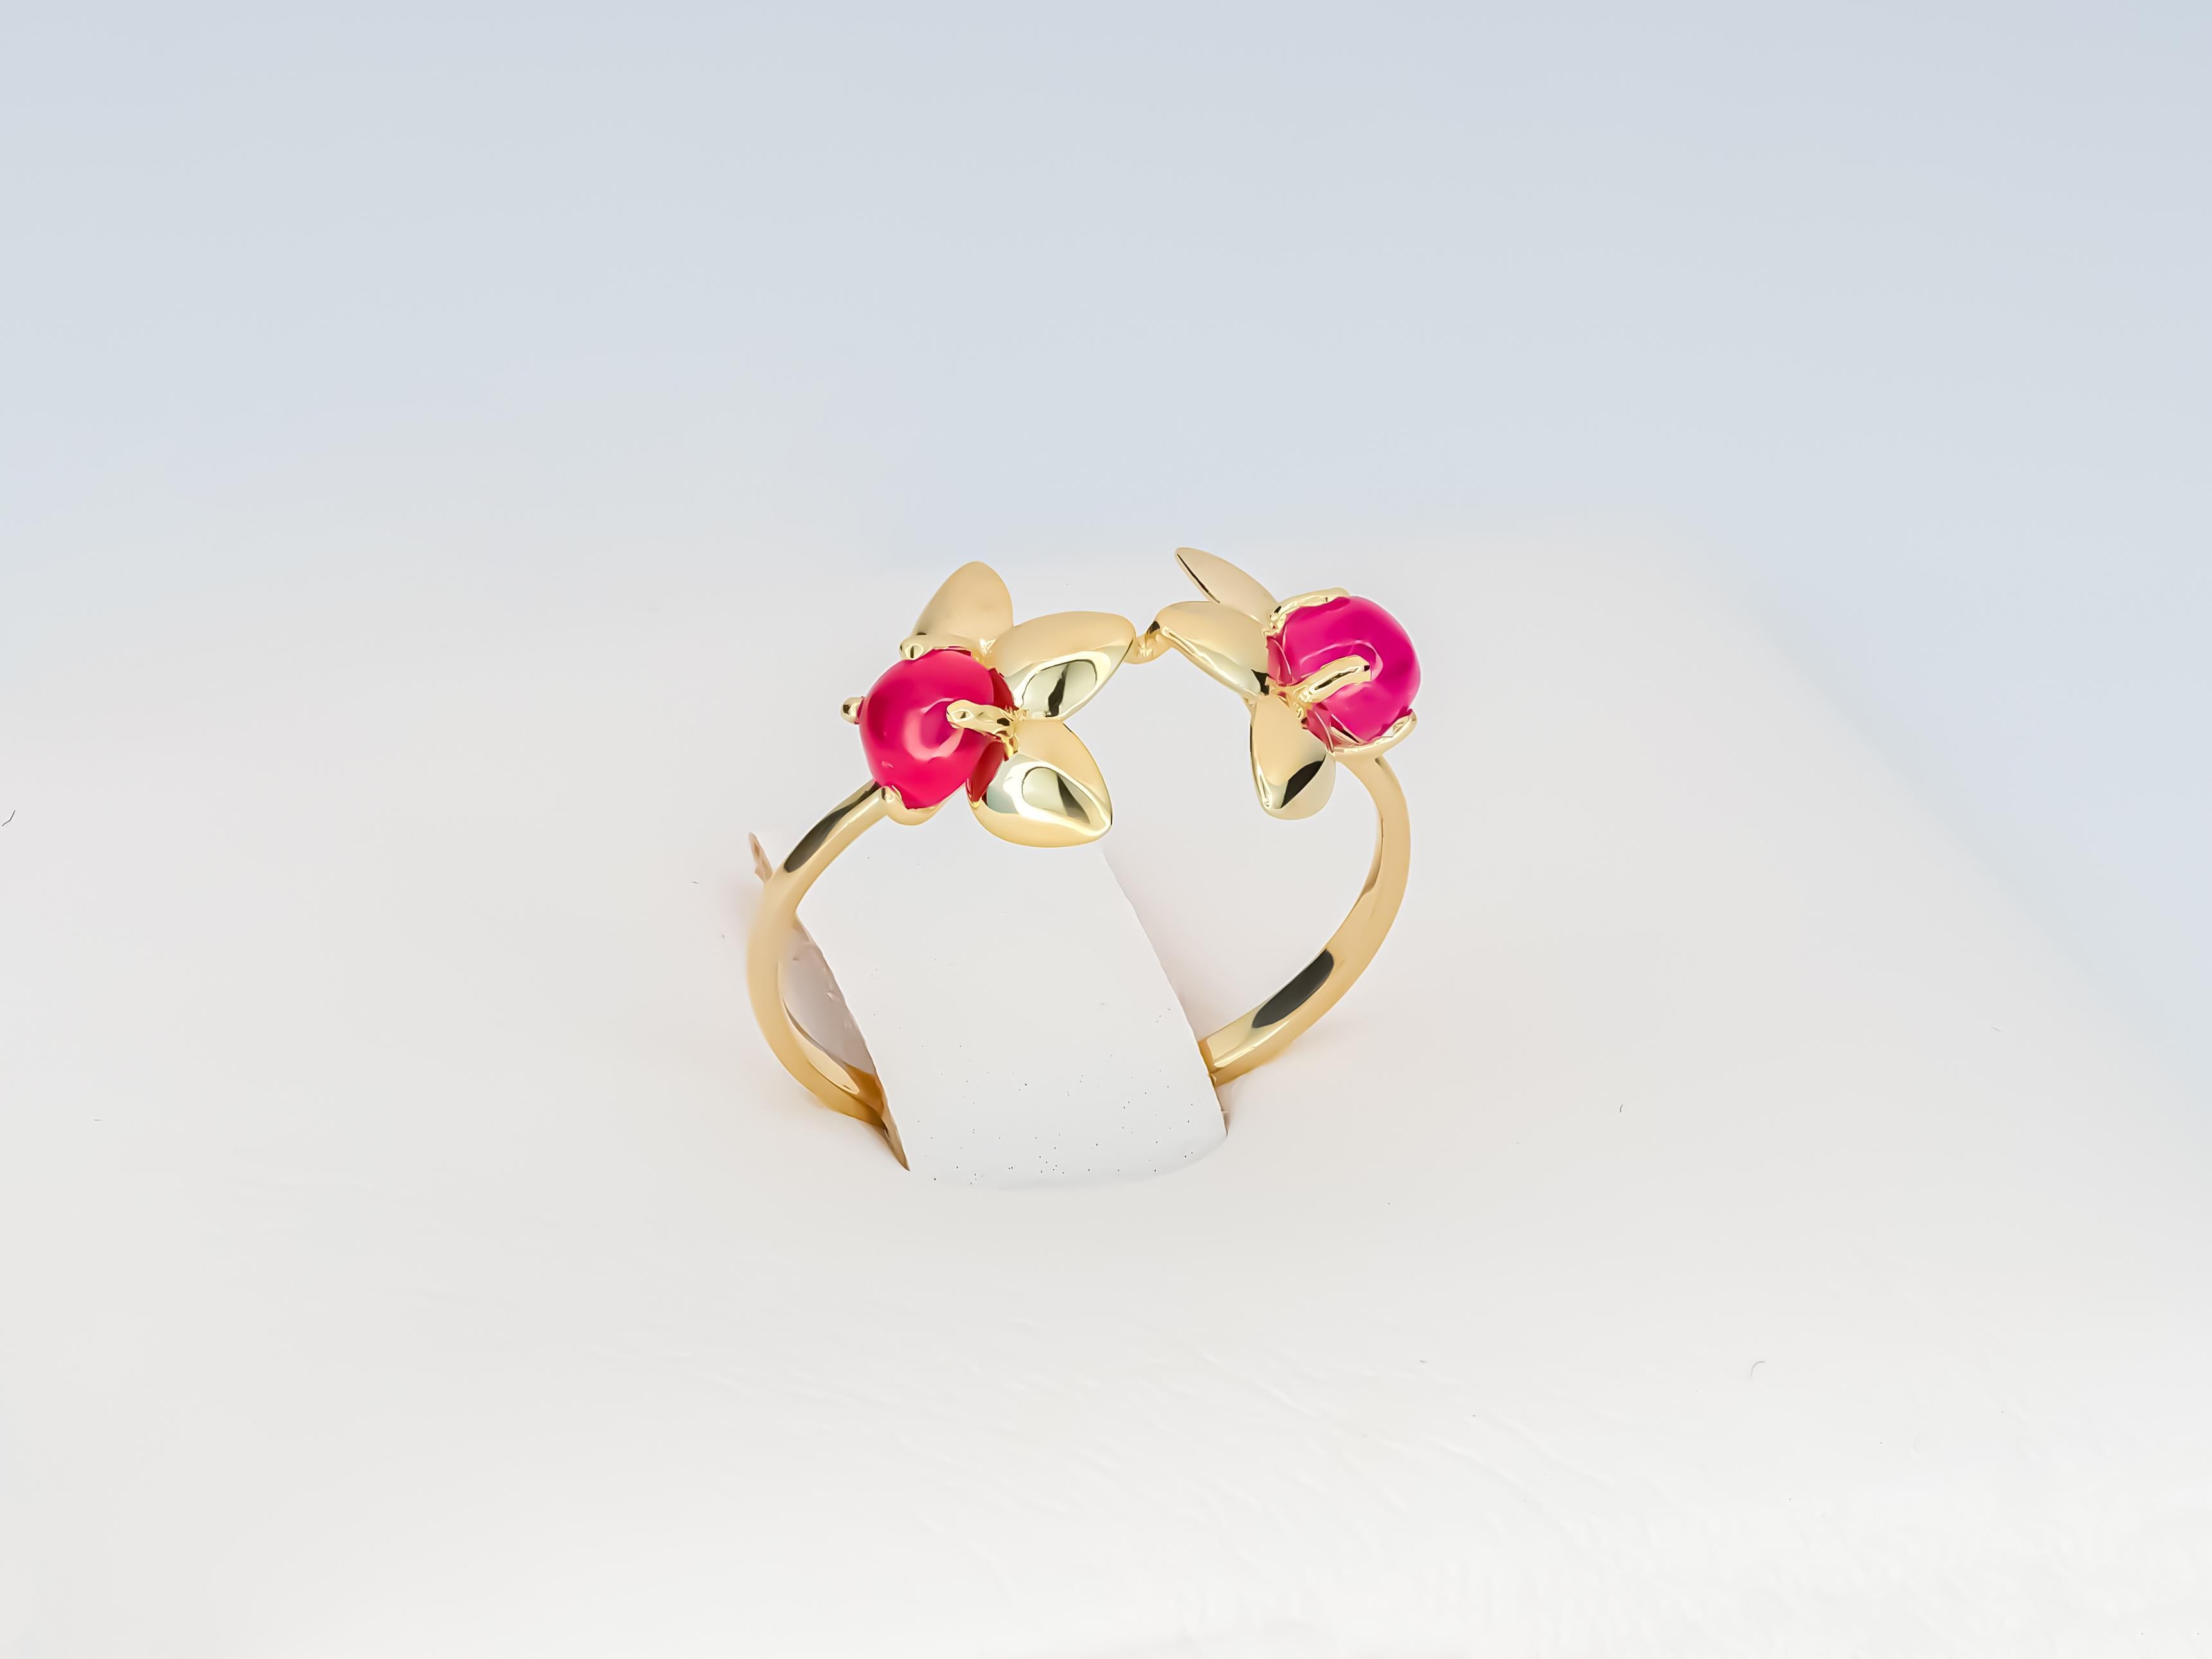 Ball Cut 14 Karat Gold Ring with 2 Rubies, Flower Gold Ring. July birthstone ruby ring